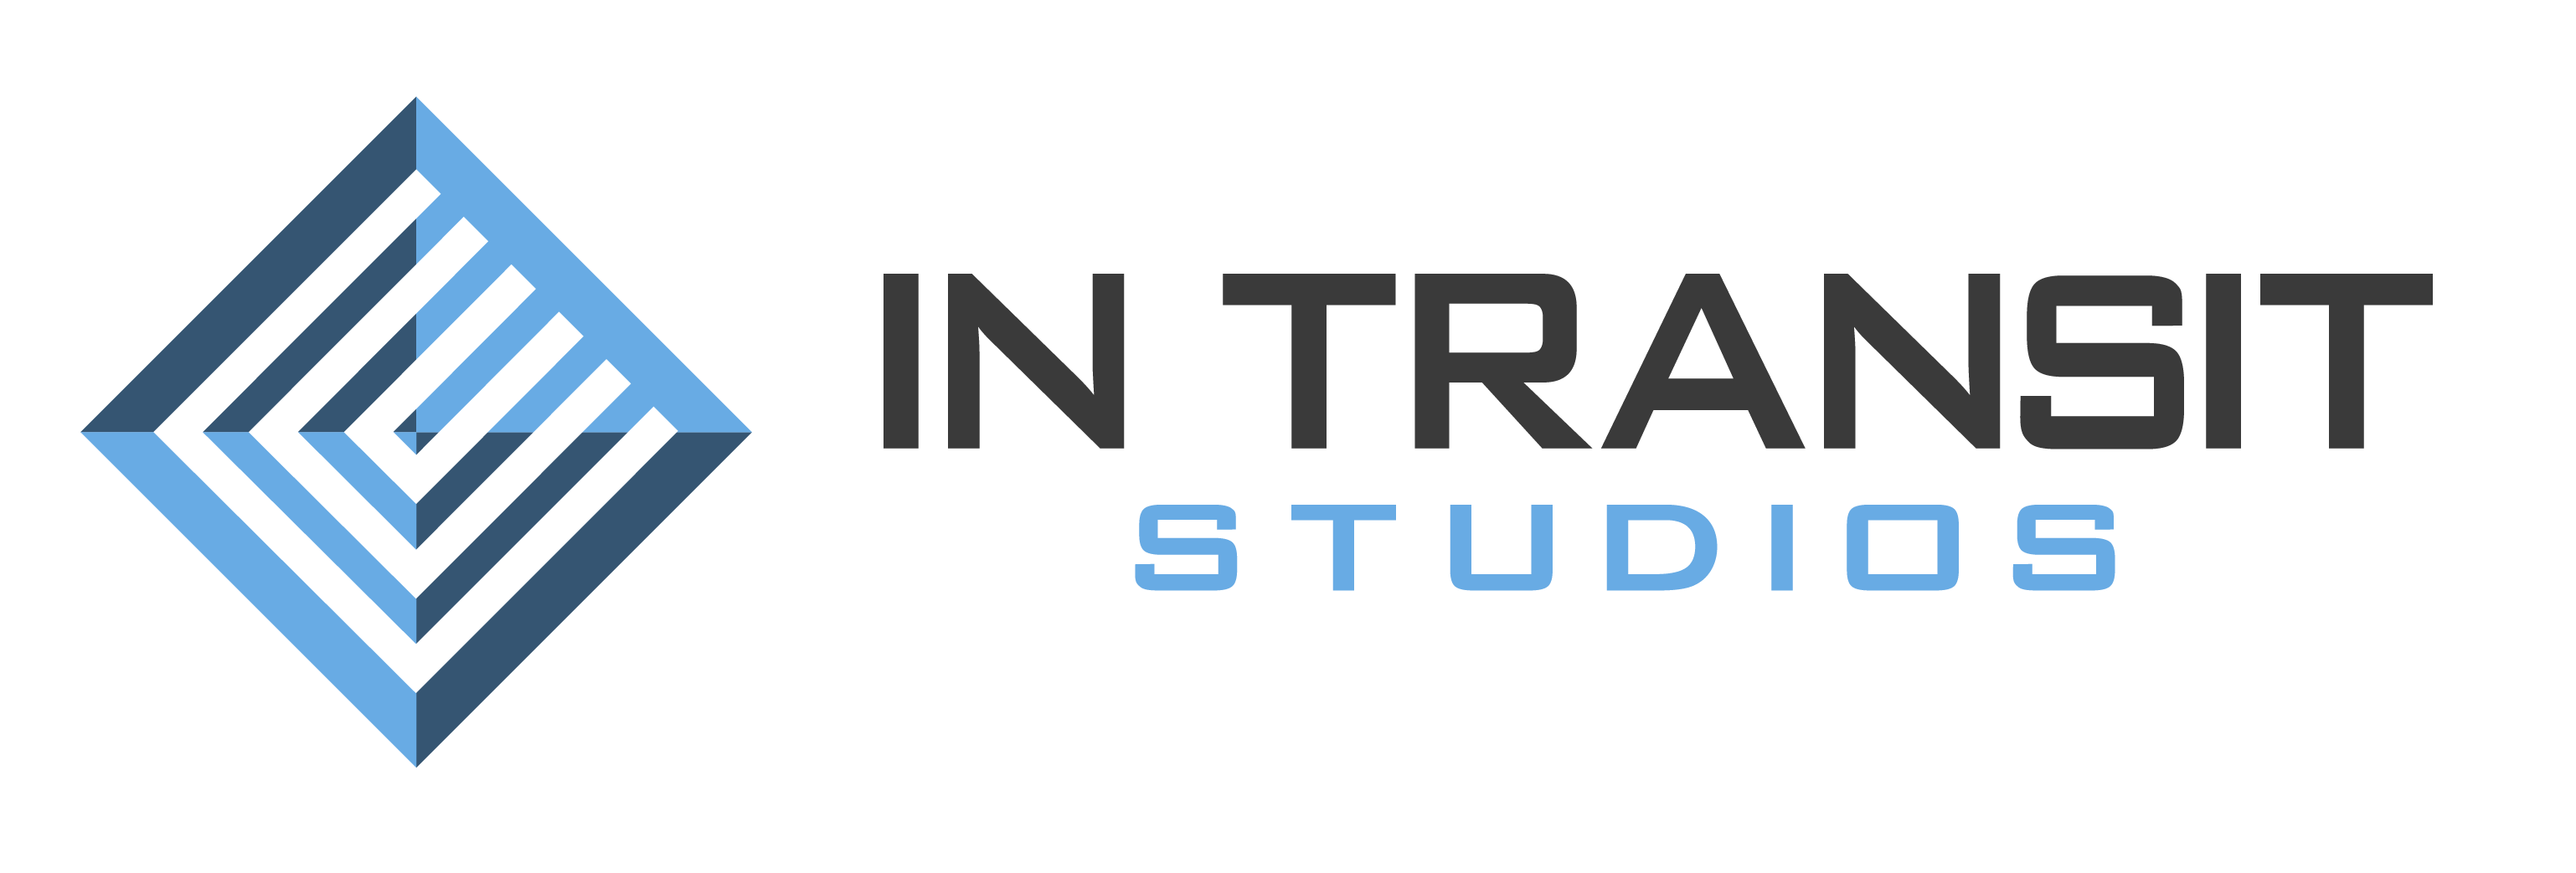 In Transit Studios | Your Digital Marketing Agency